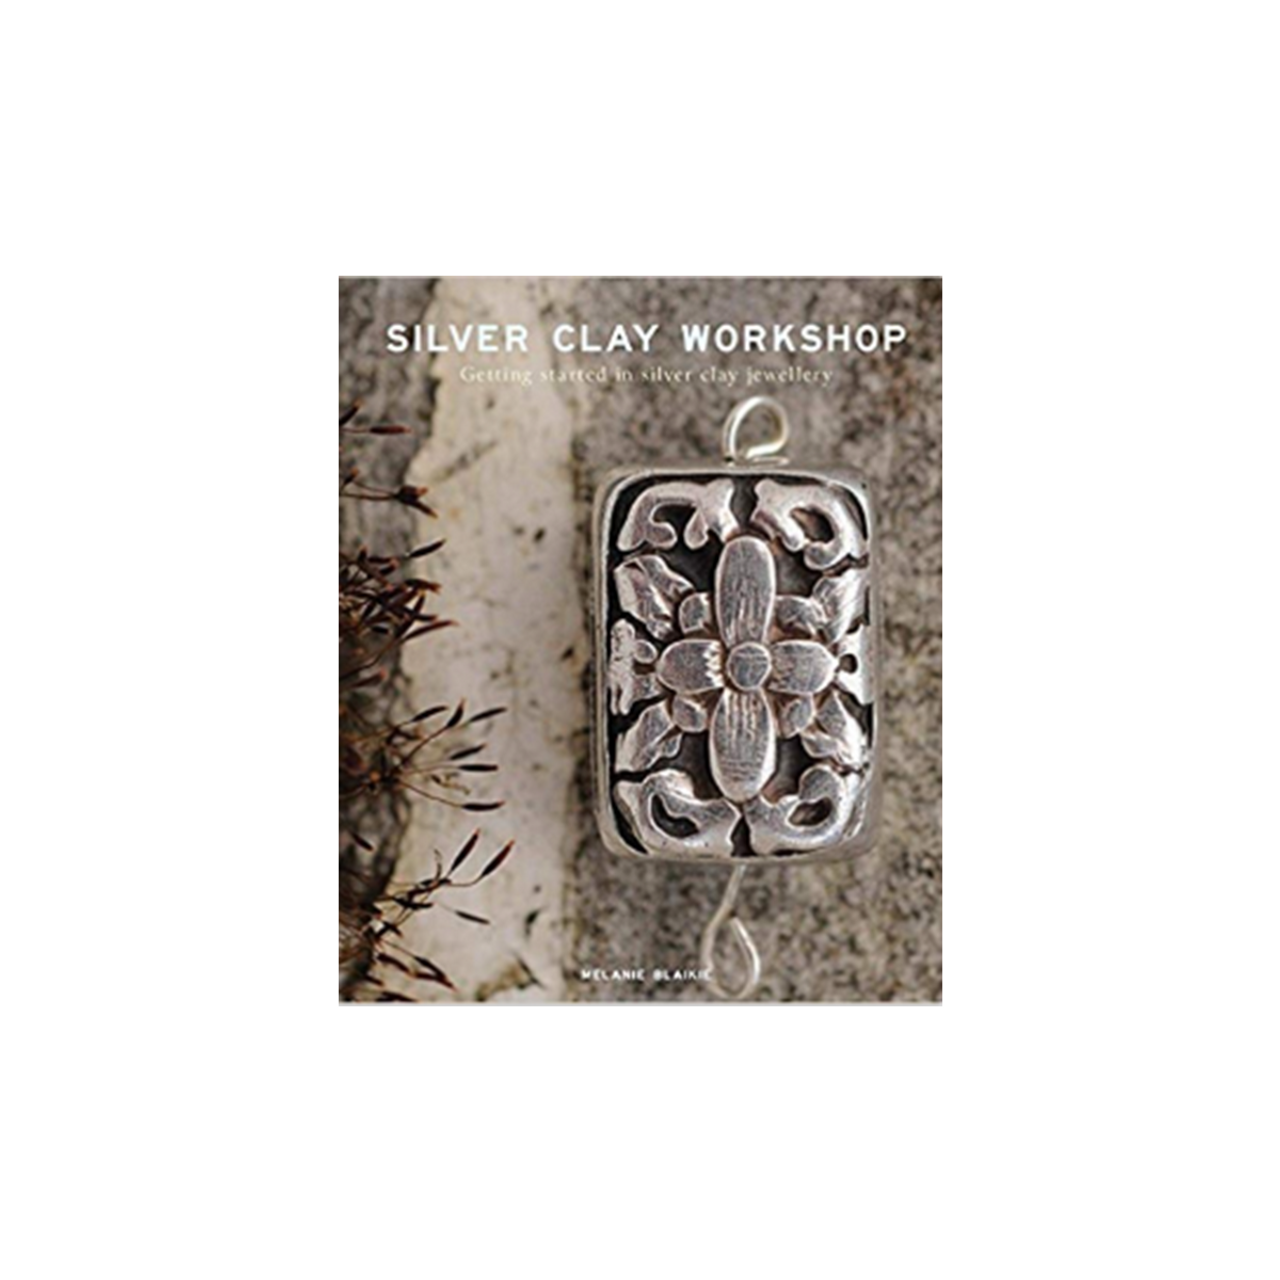 Silver Clay Workshop: Getting Started in Silver Clay Jewellery 
Melanie Blaikie Book